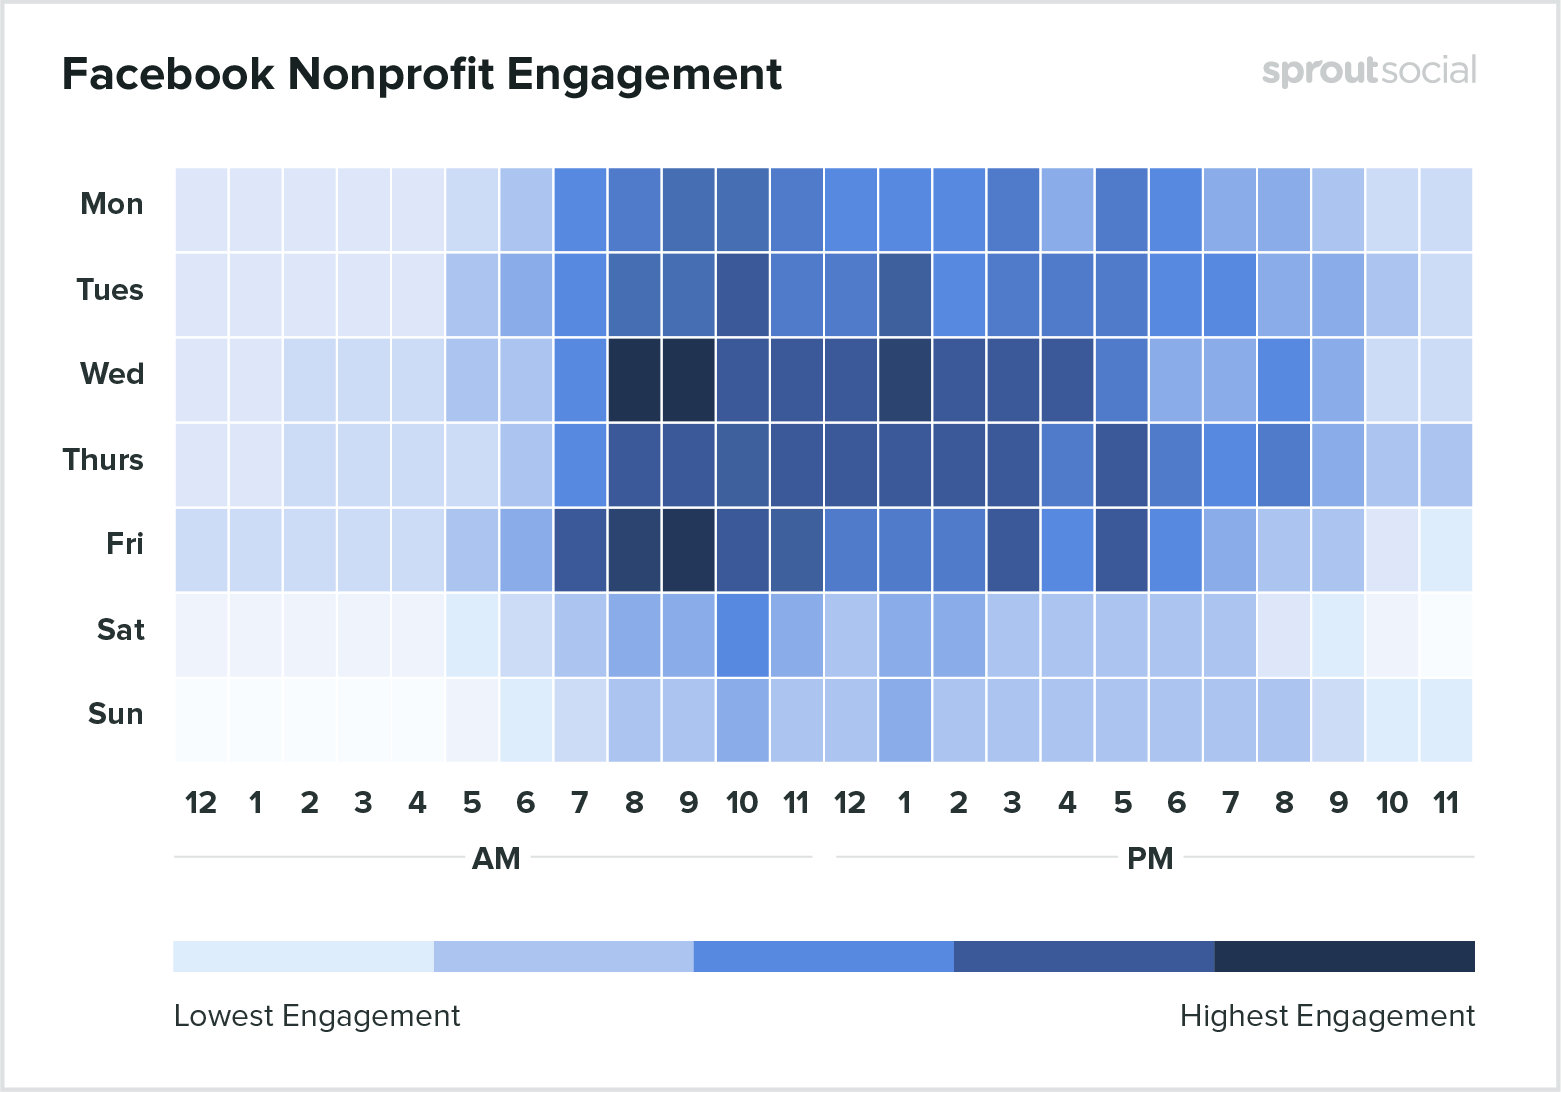 Facebook-nonprofits-engagement-1